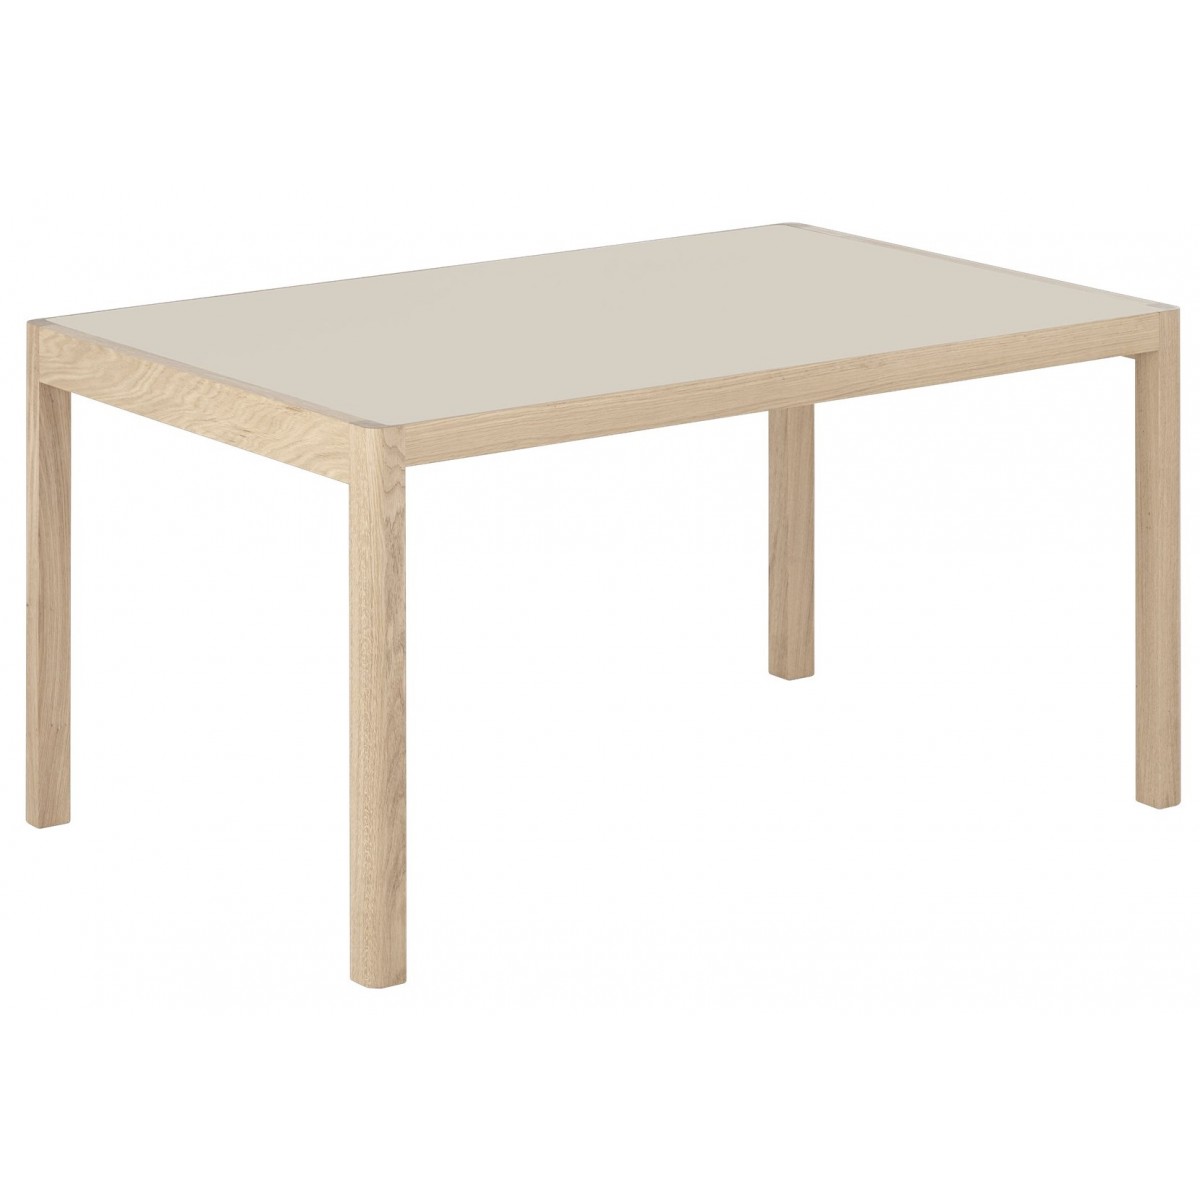 140 x 92 cm – warm grey linoleum tabletop – Workshop Table